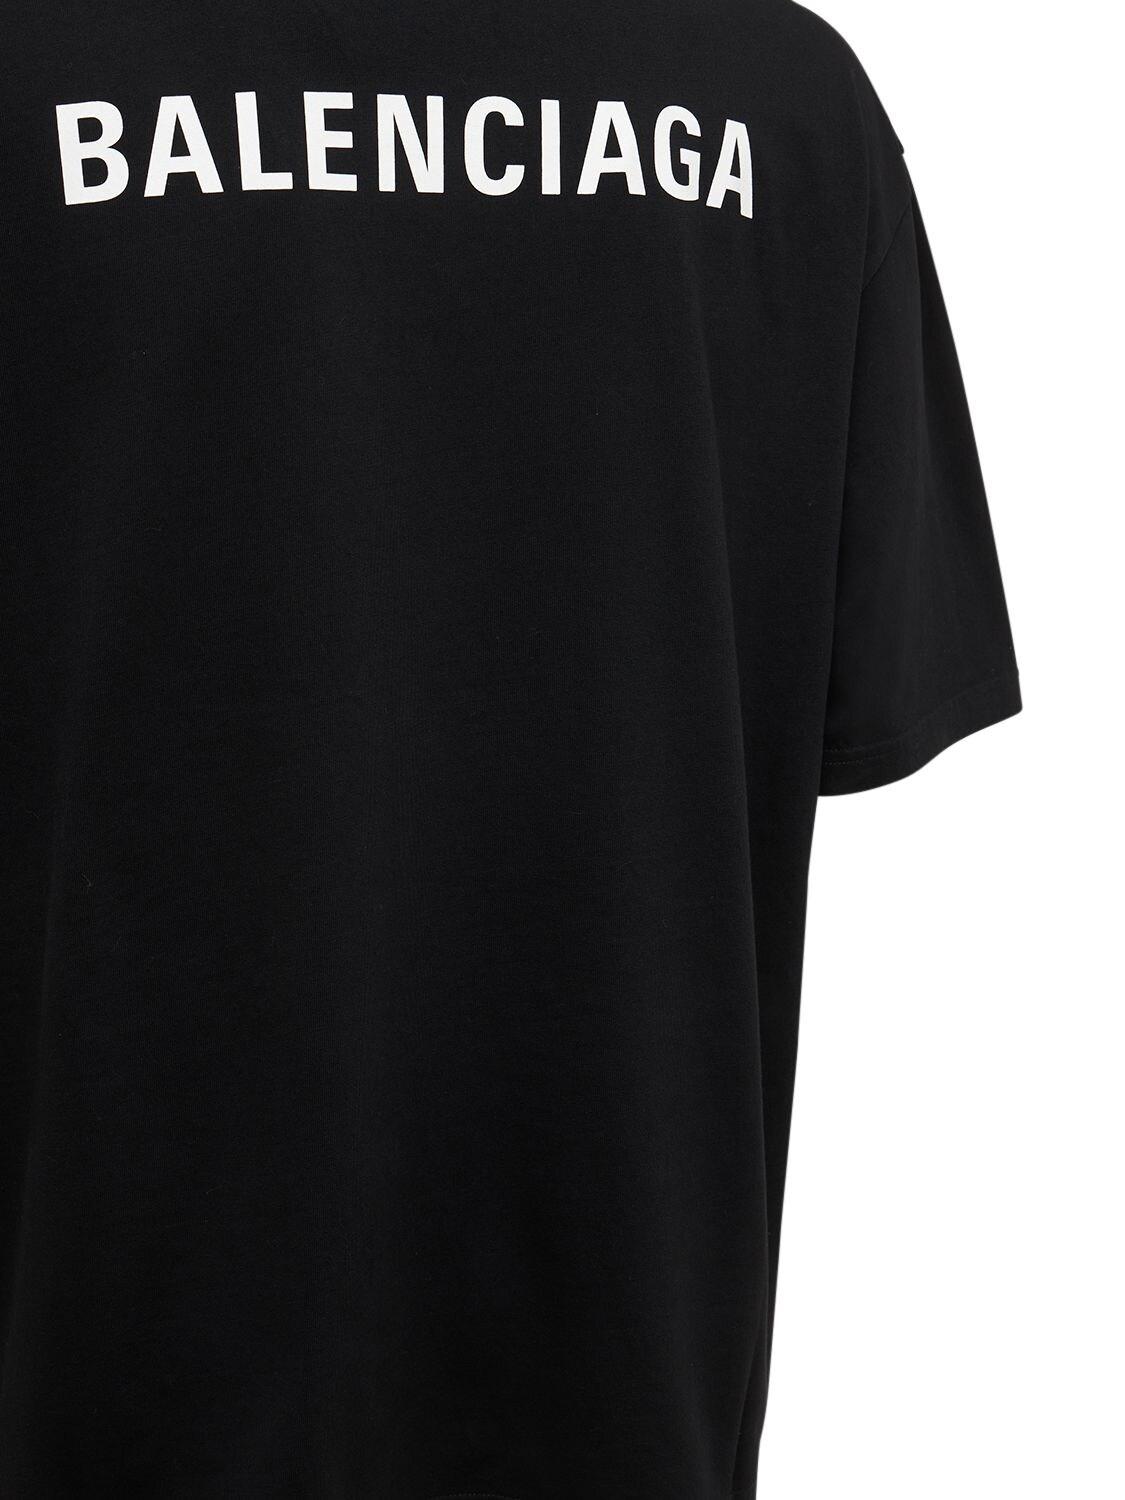 Balenciaga Logo Printed Cotton Jersey T-shirt in Black for Men | Lyst